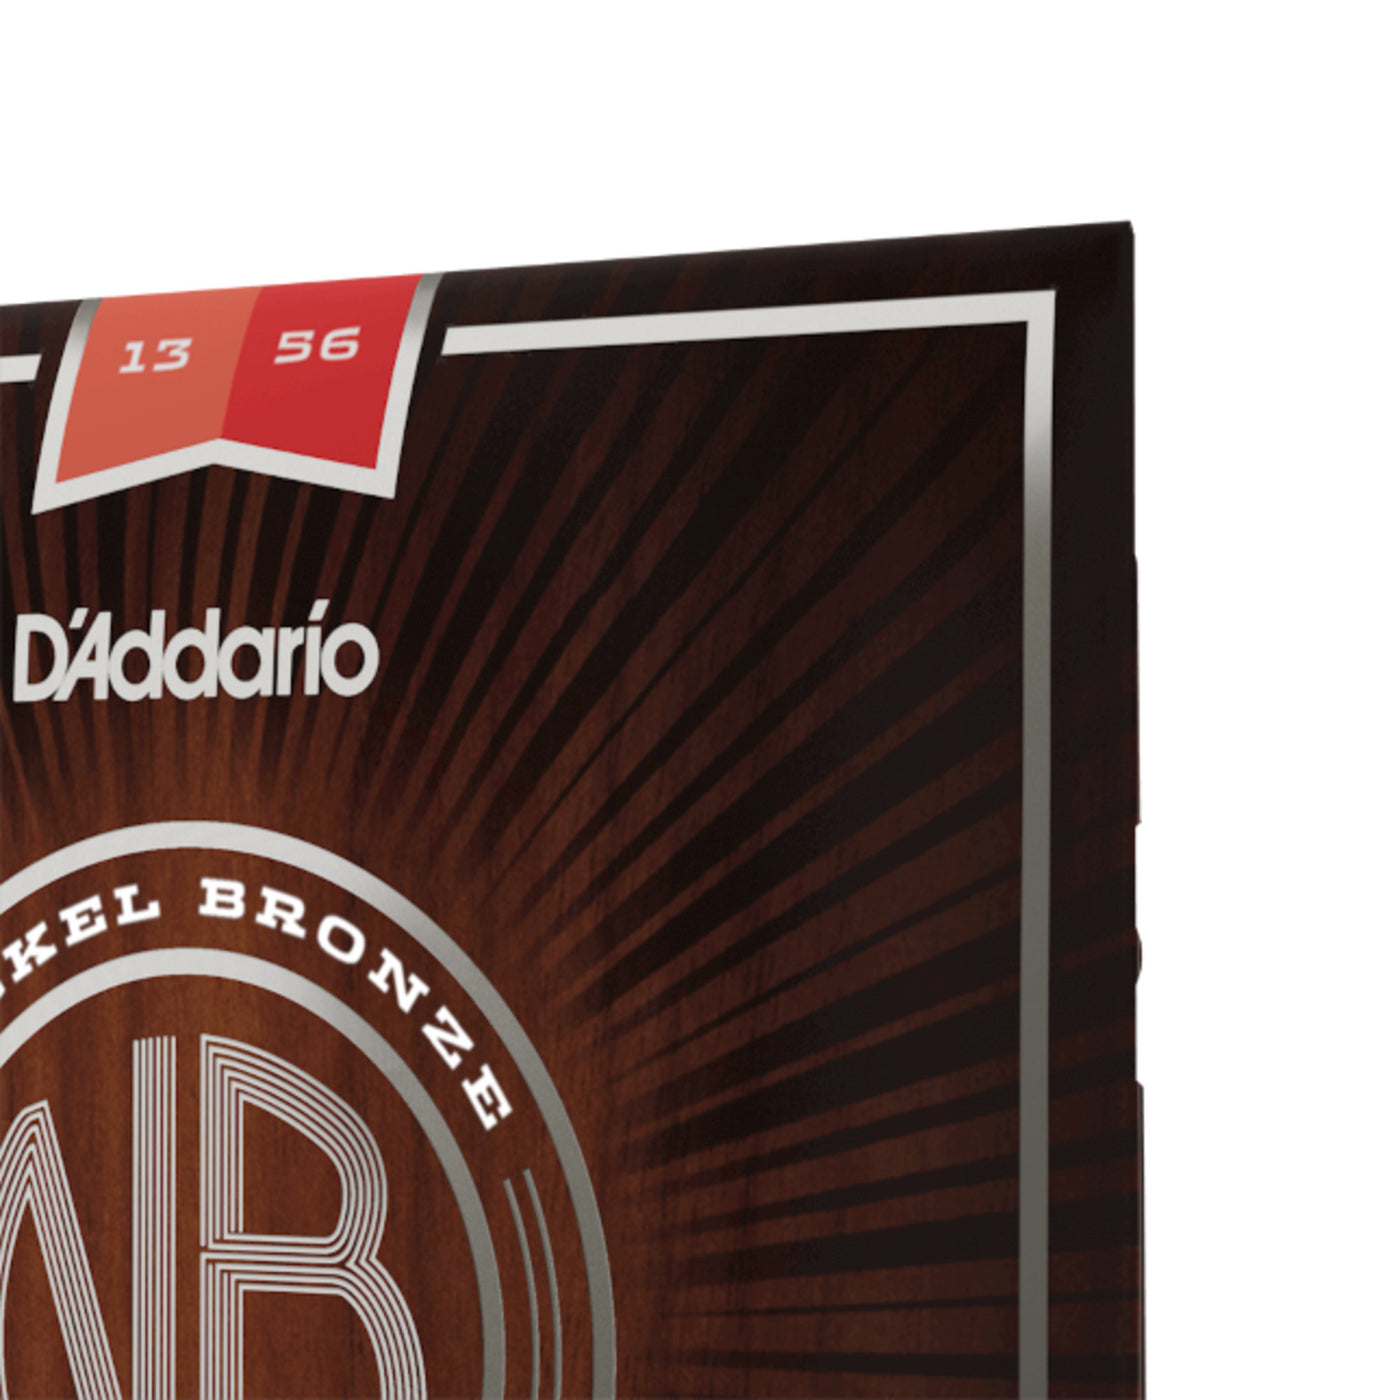 D'Addario Nickel Bronze Acoustic Guitar Strings, Medium, 13-56 (NB1356)